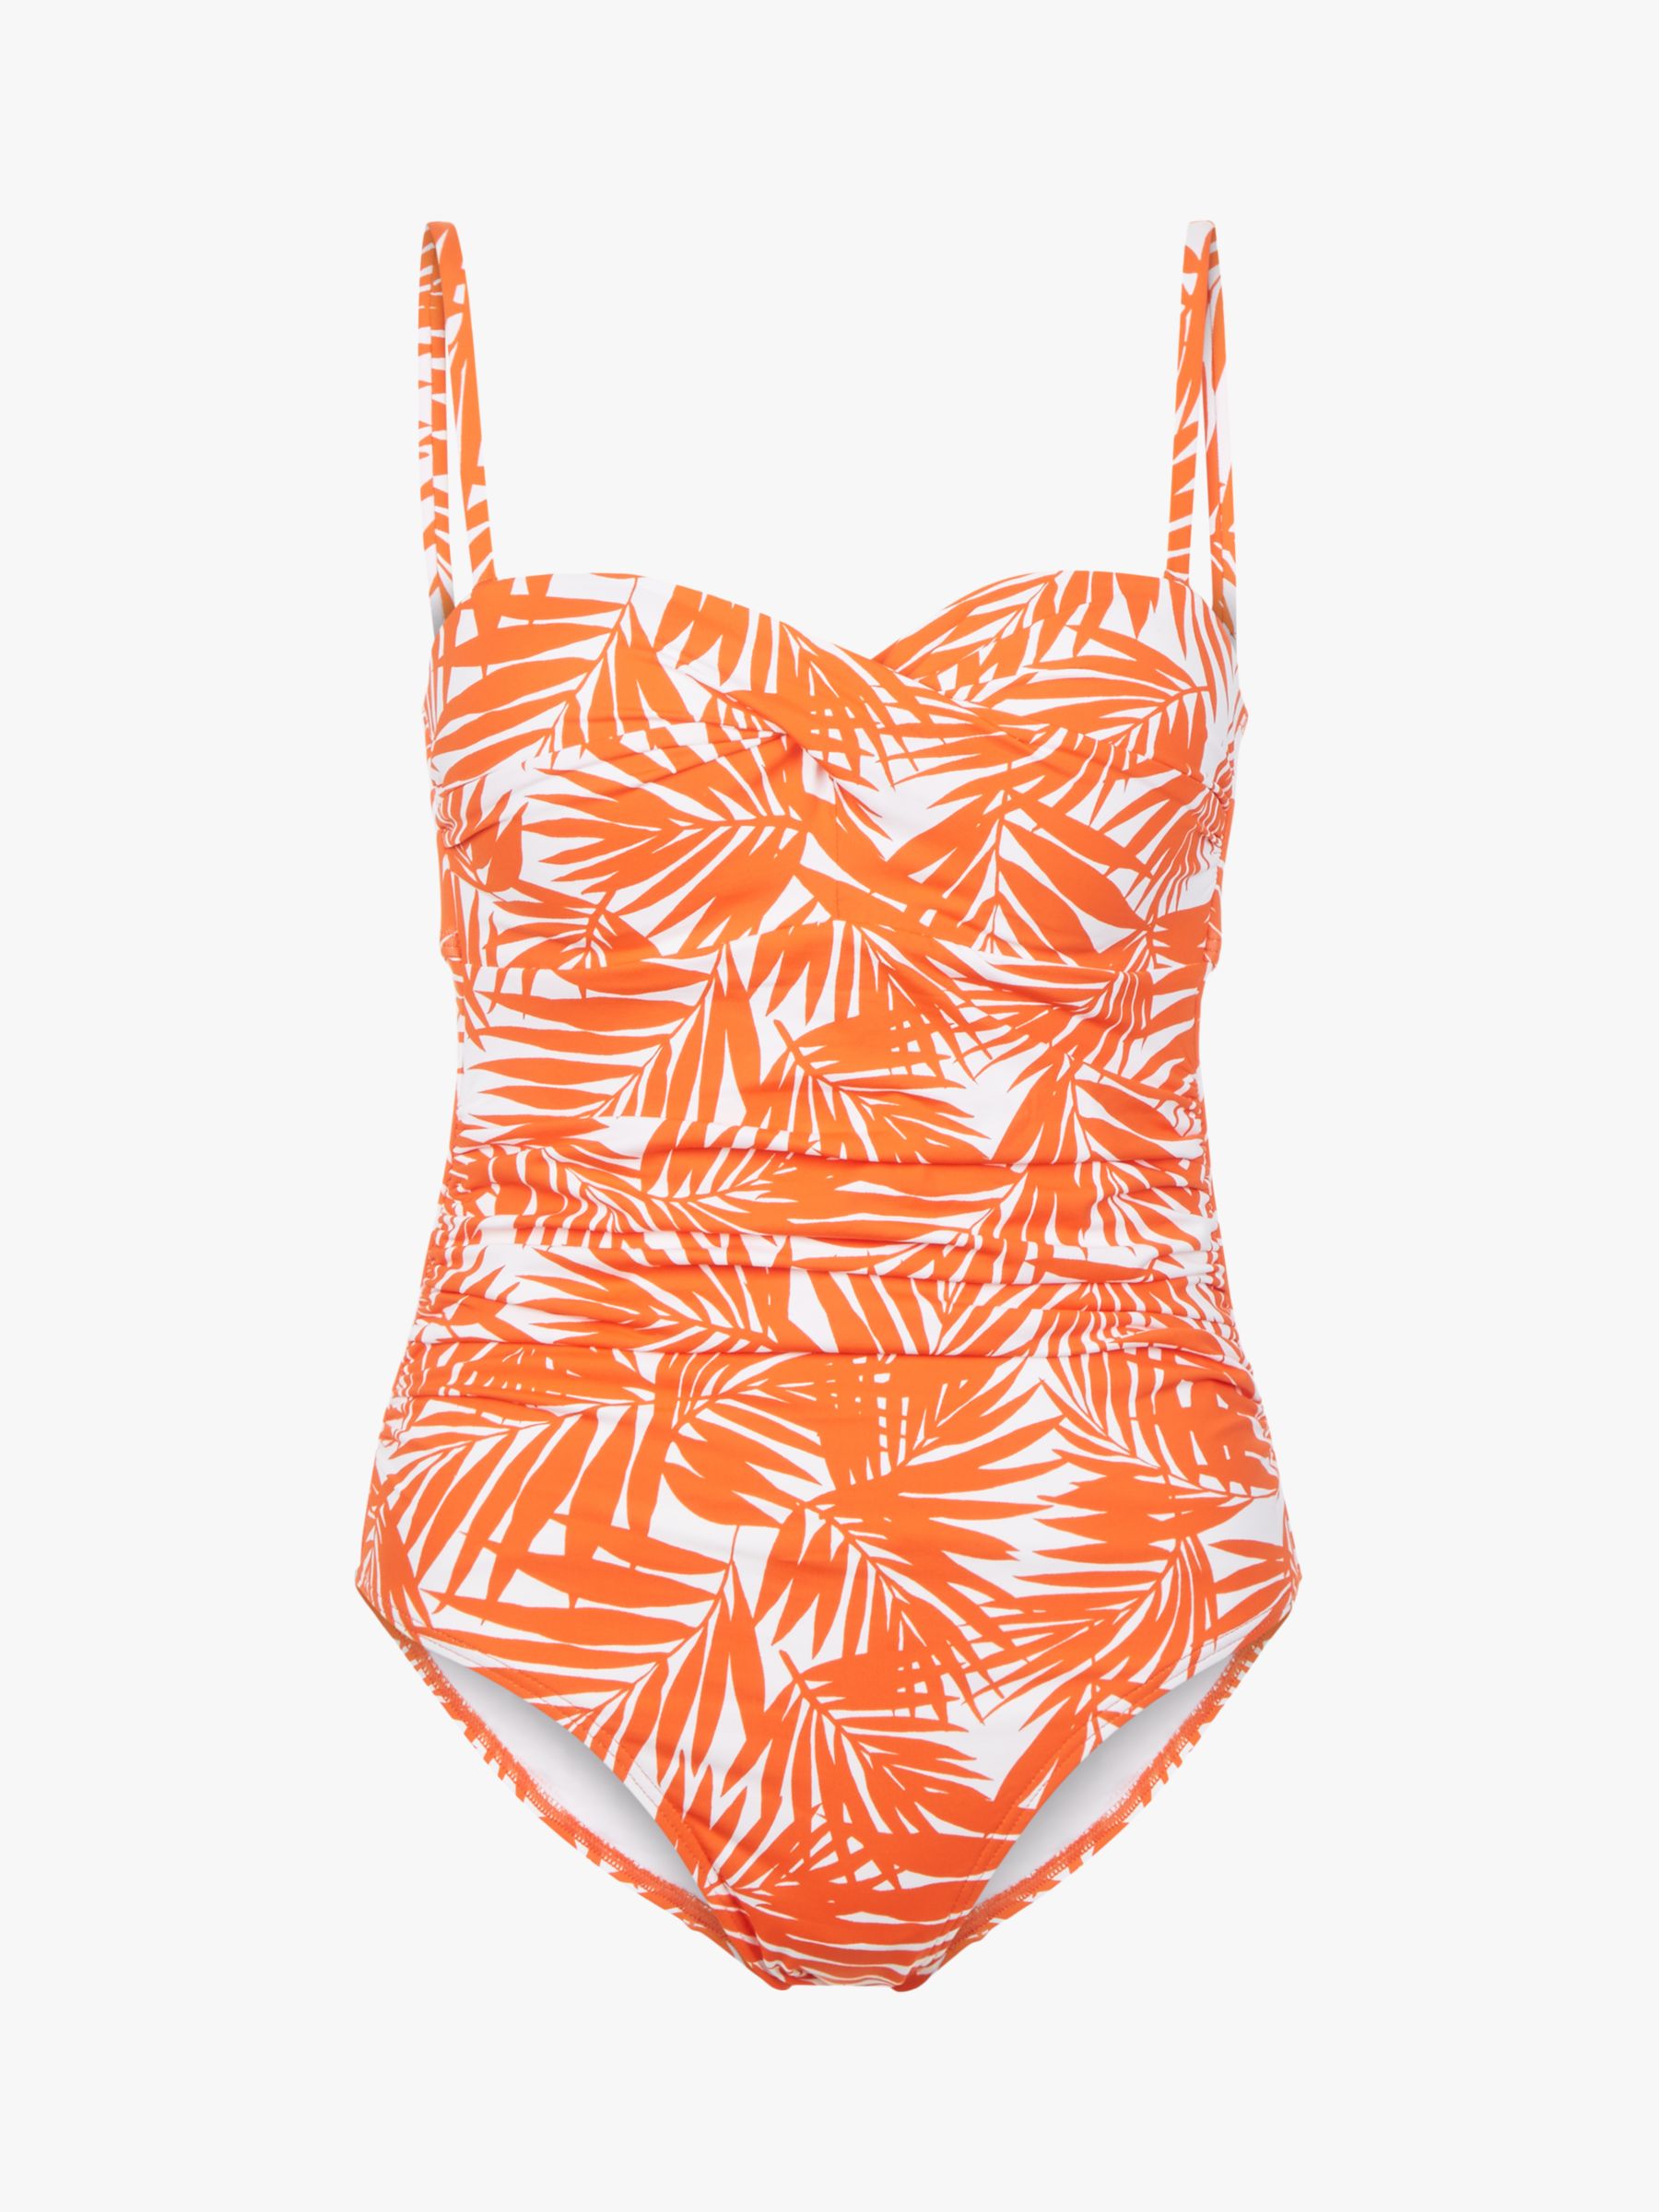 Hobbs Sidonie Square Print Swimsuit